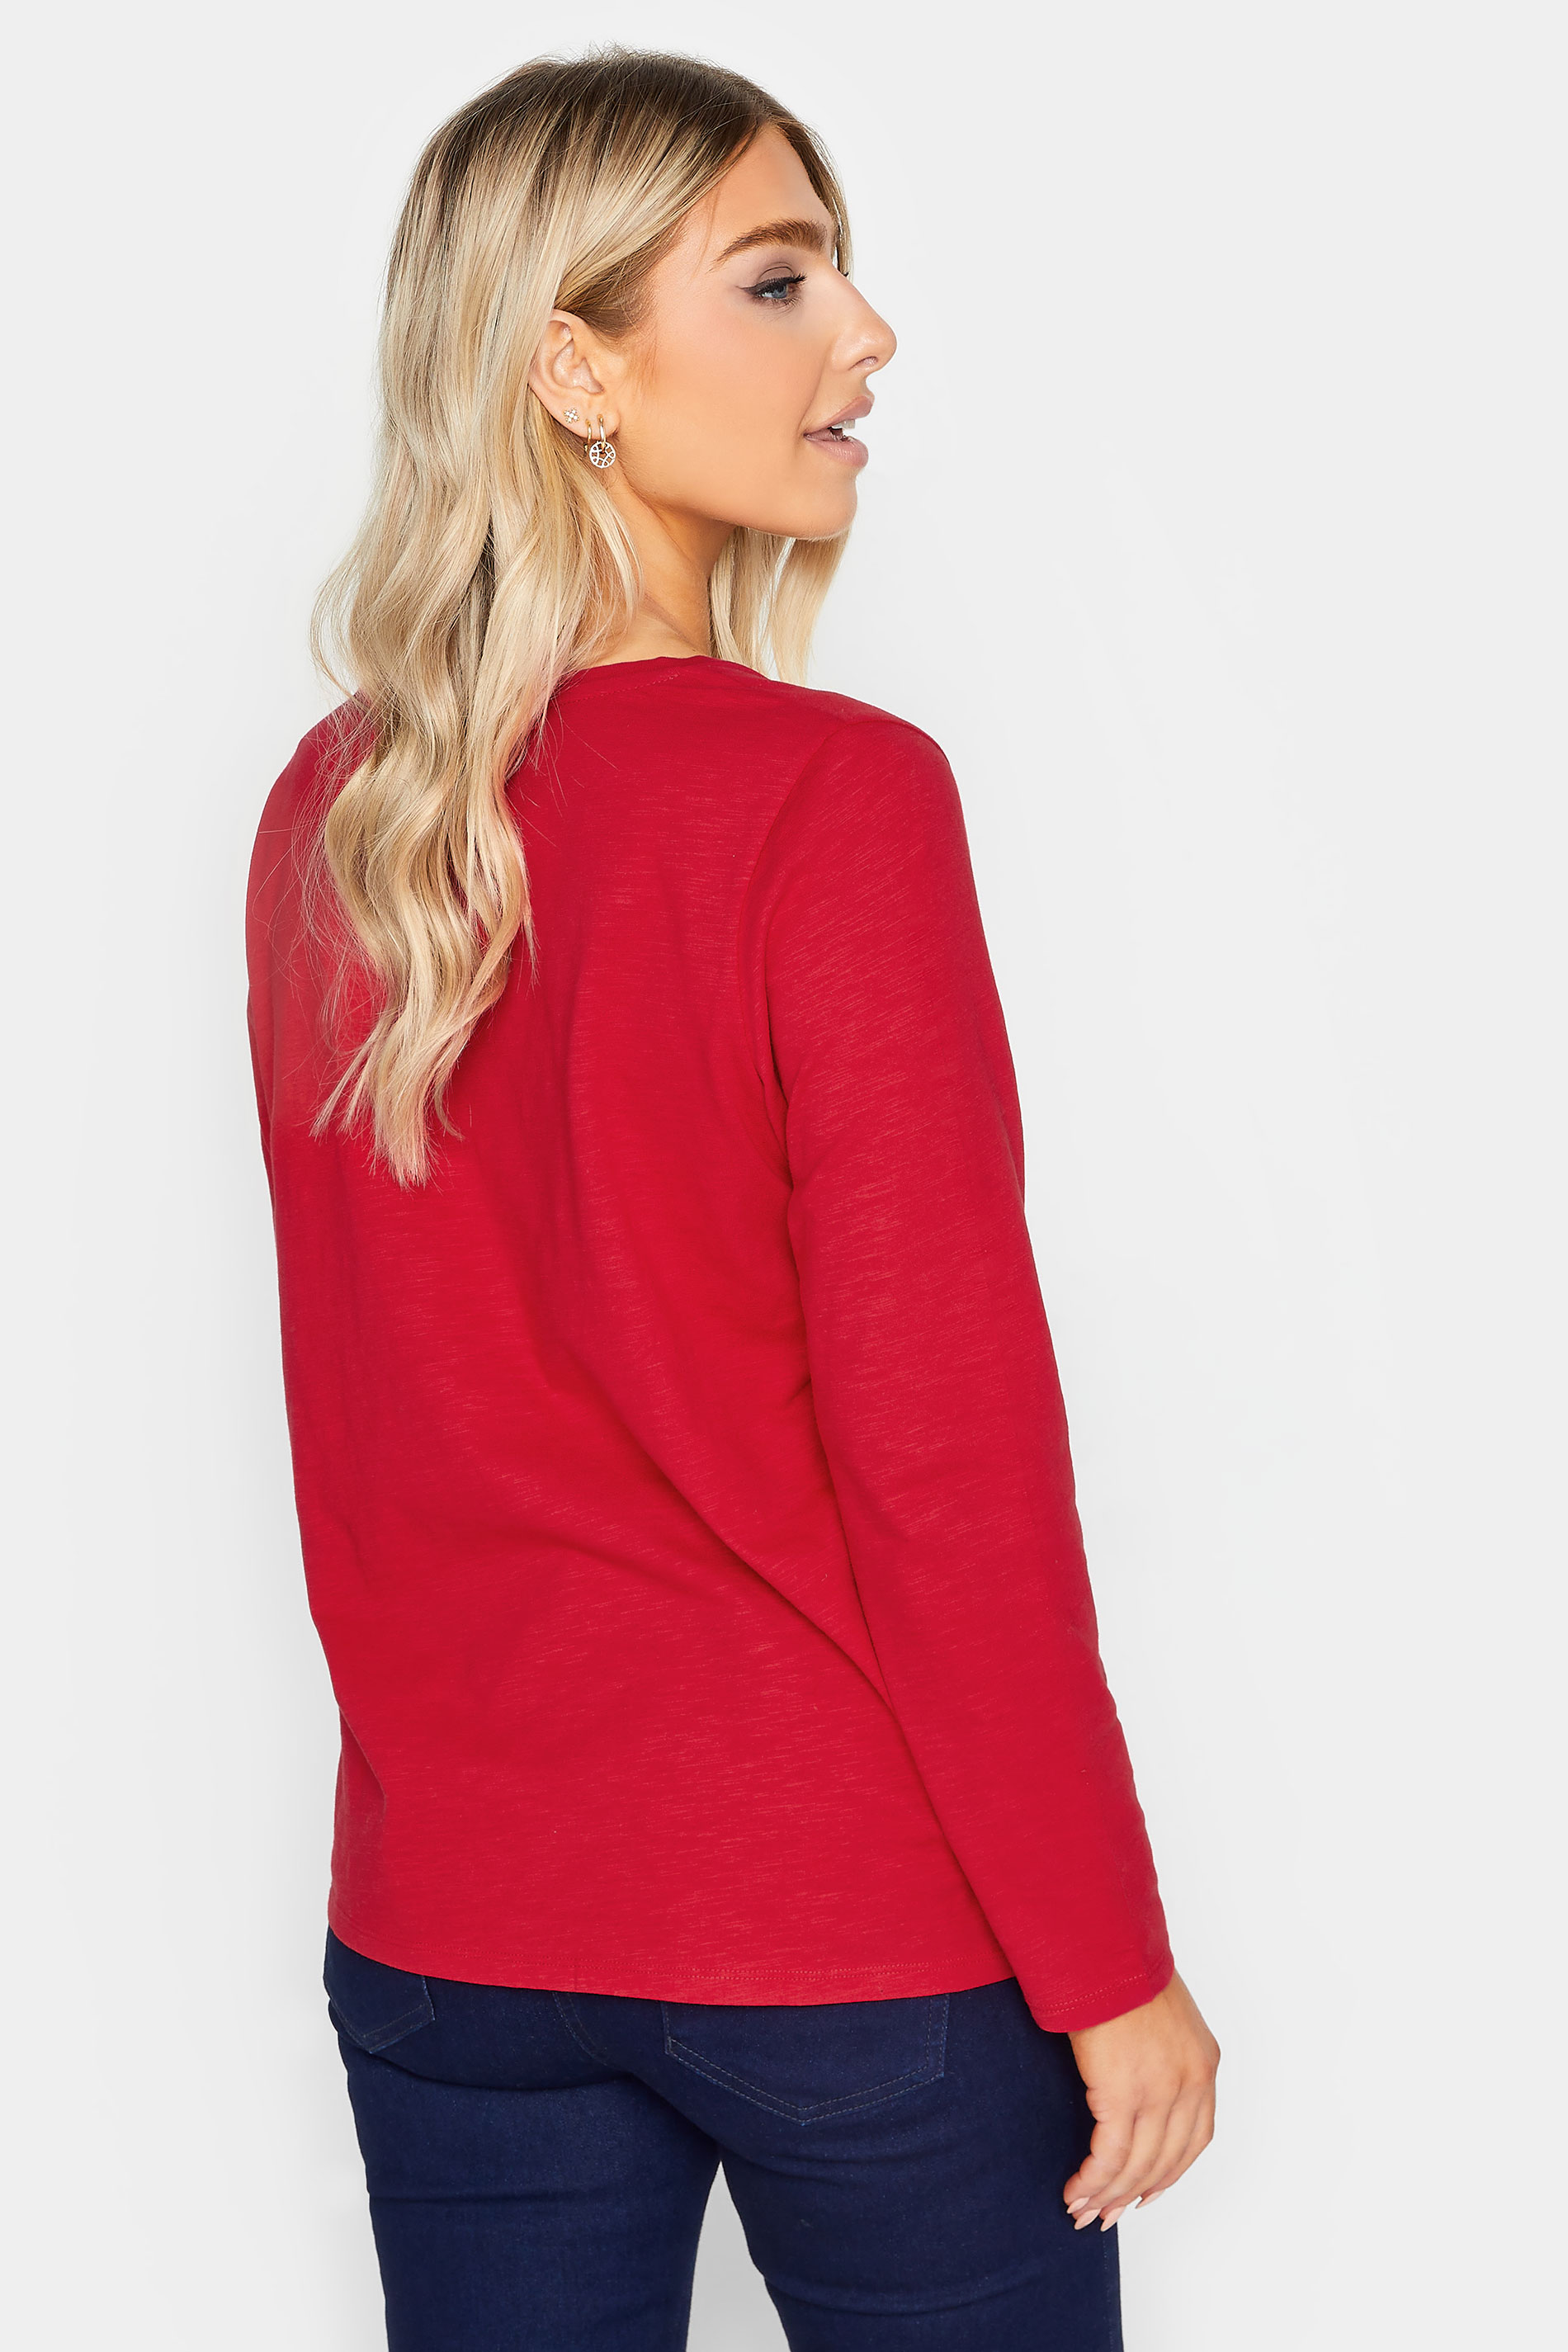 M&Co Red V-Neck Long Sleeve Cotton Blend T-Shirt | M&Co 3